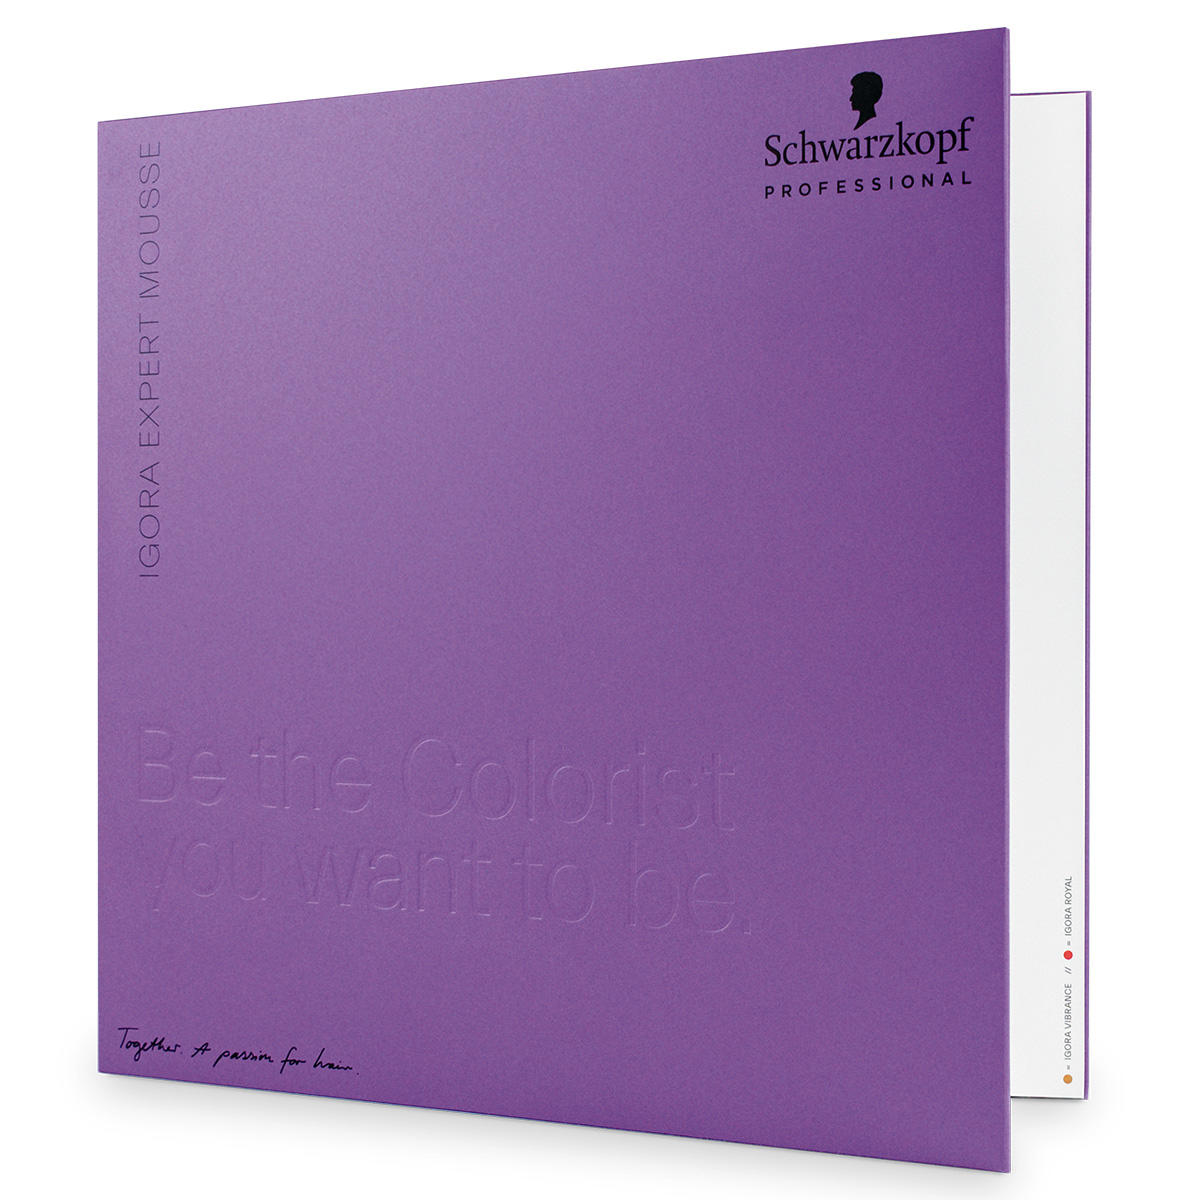 Schwarzkopf Professional Colour chart  - 1